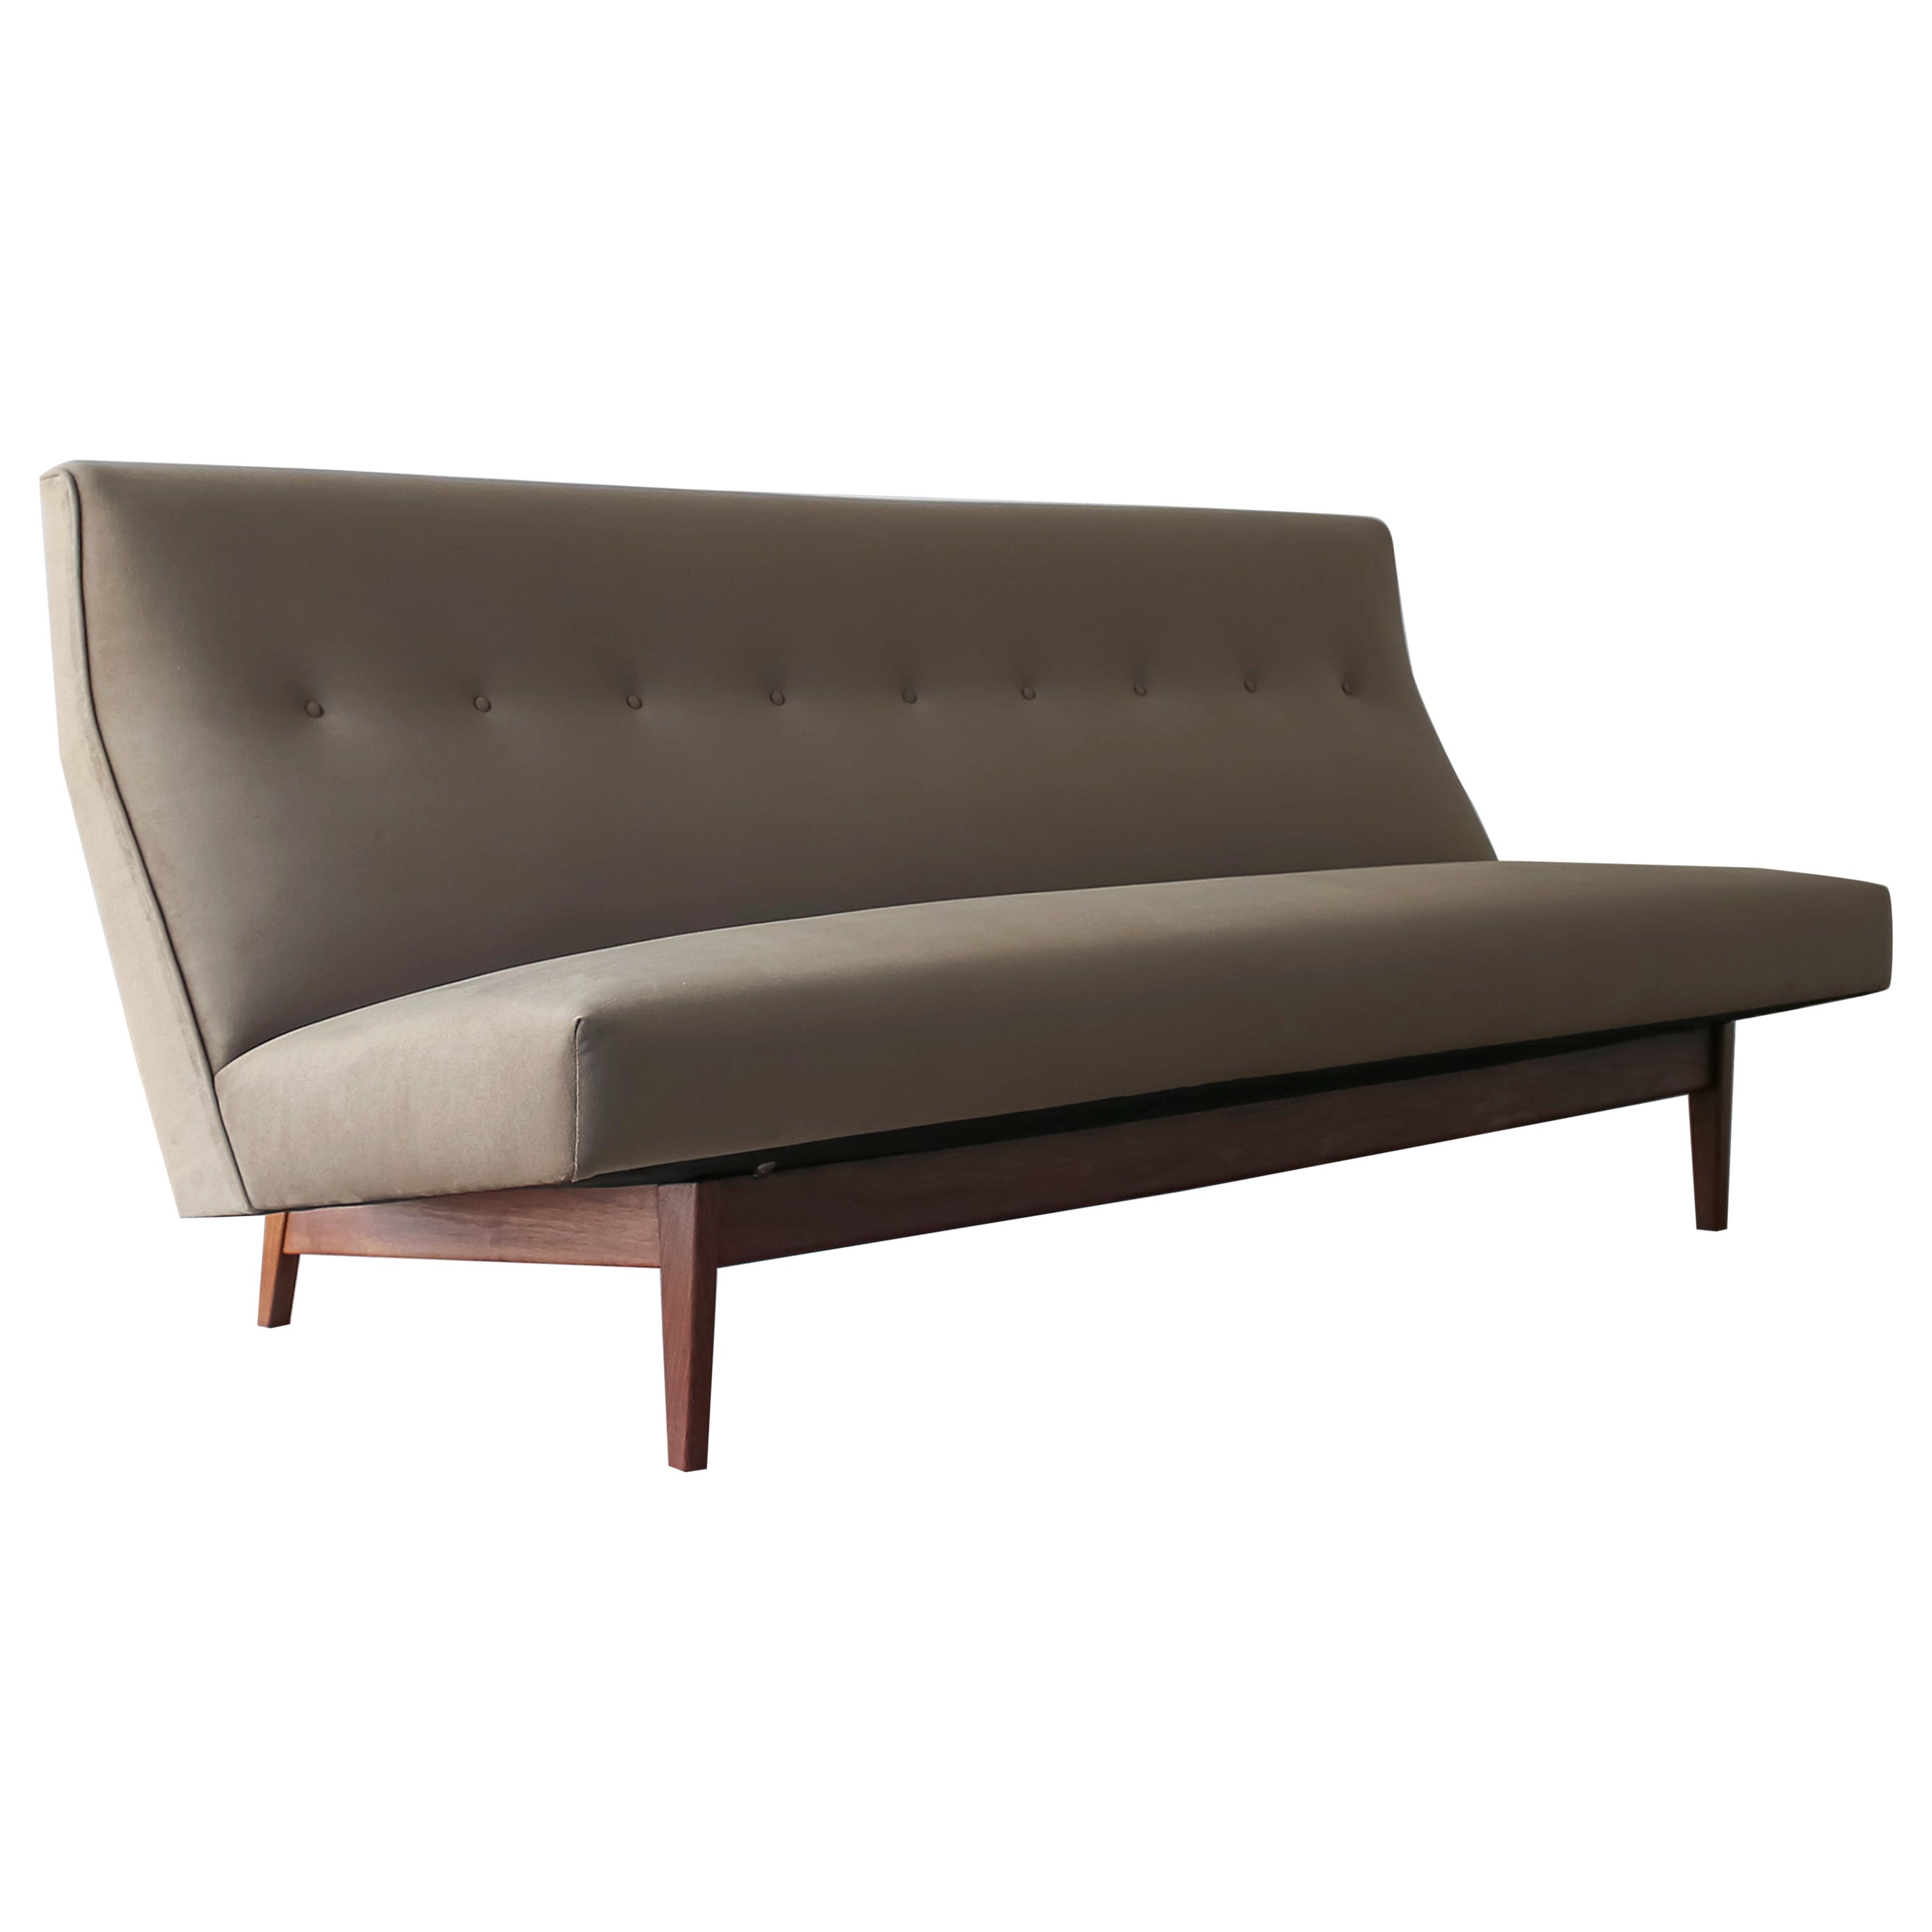 Model 250 armloses sofa von Jens Risom - 2 verfügbar